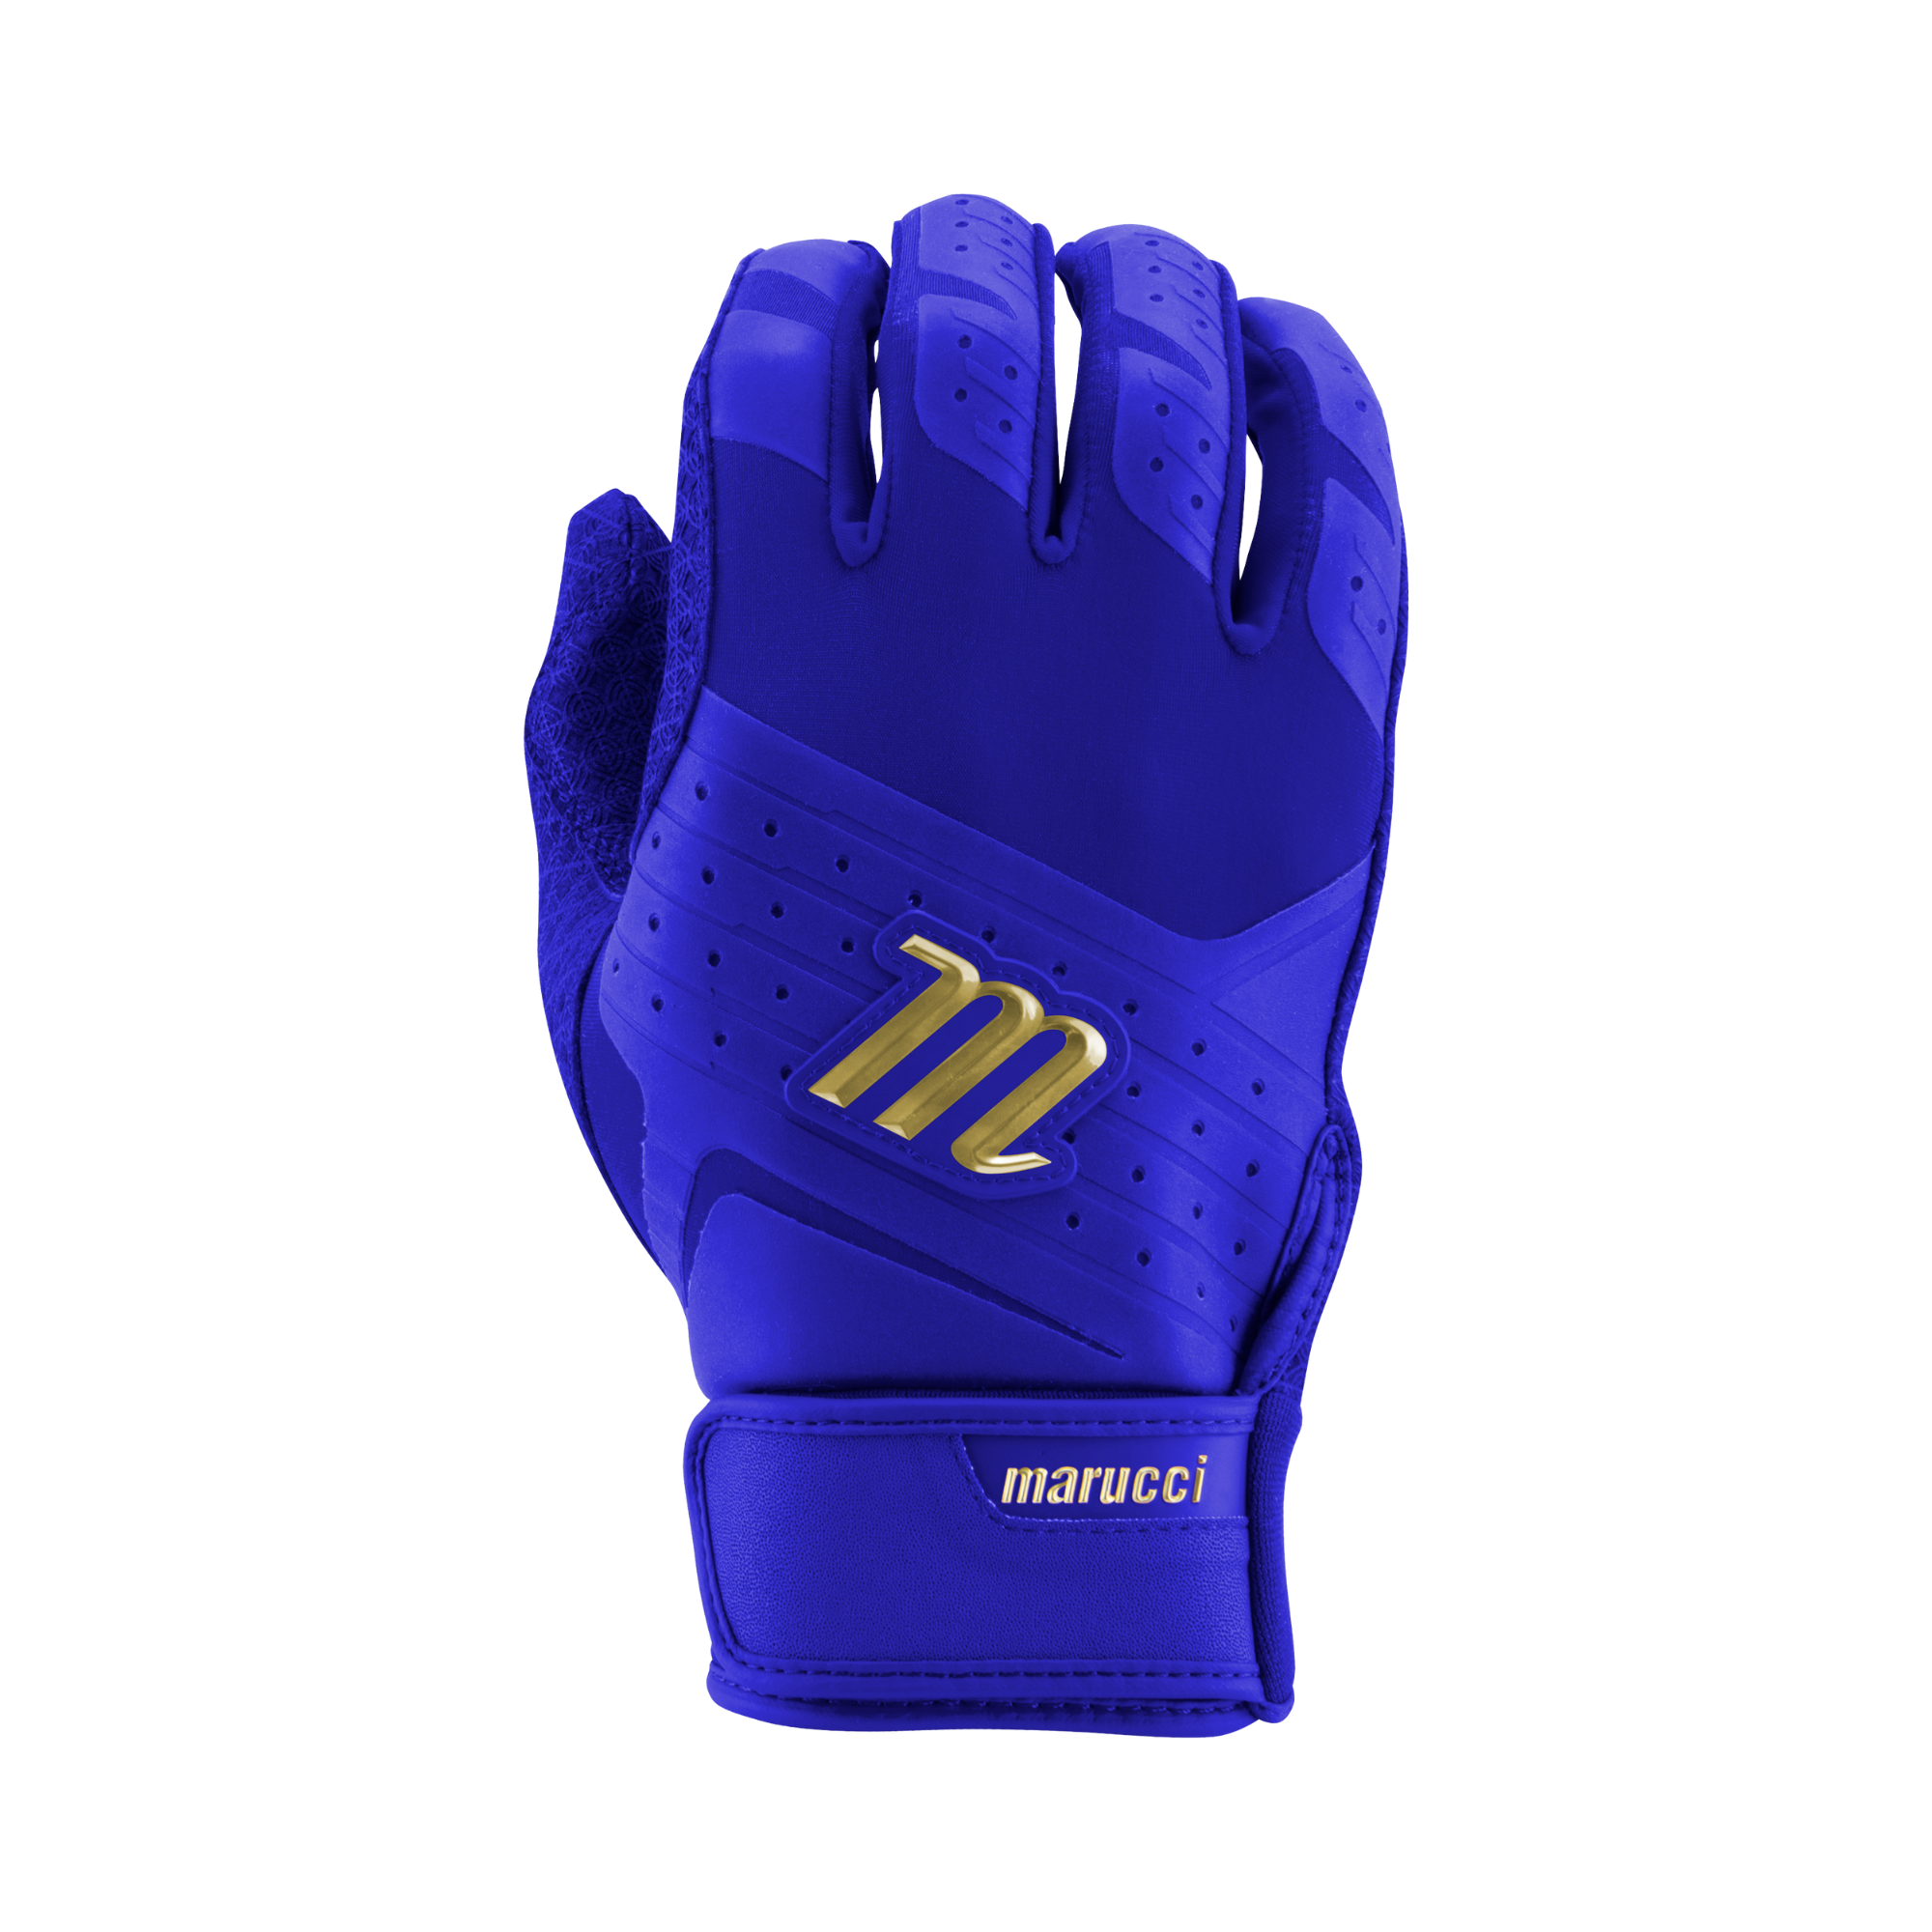 Marucci Pittards Reserve Batting Glove Royal Blue